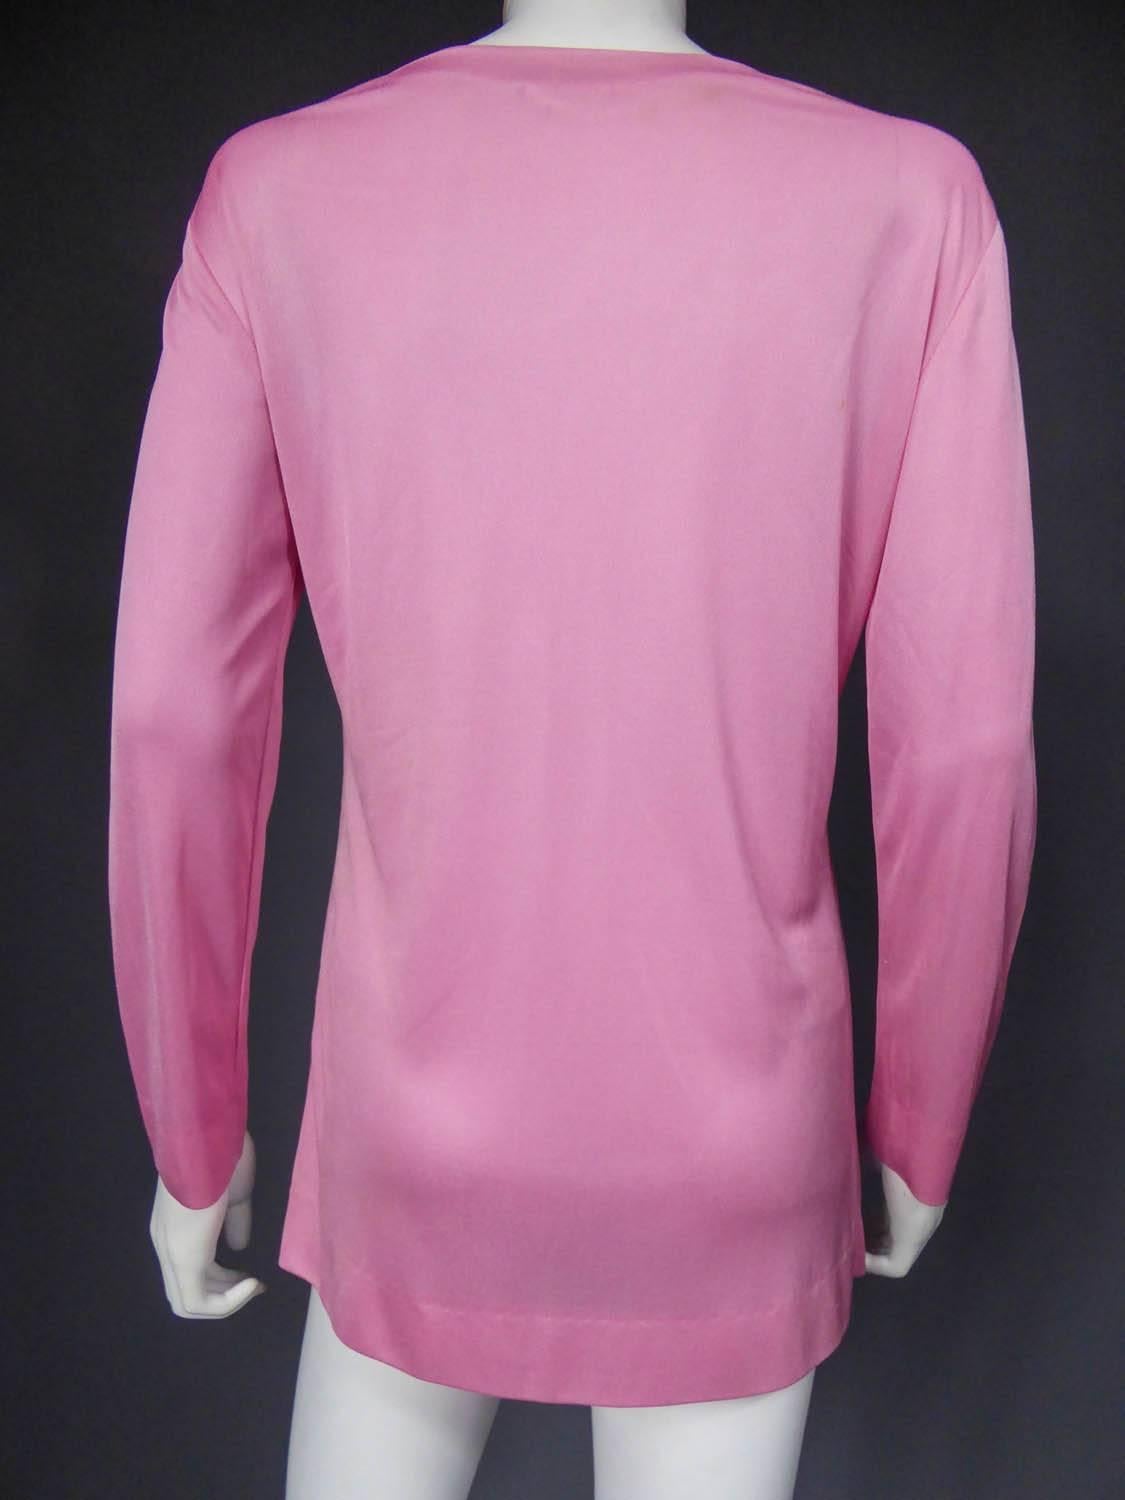 Emilio Pucci  Early jersey silk Top- Circa 1960 8